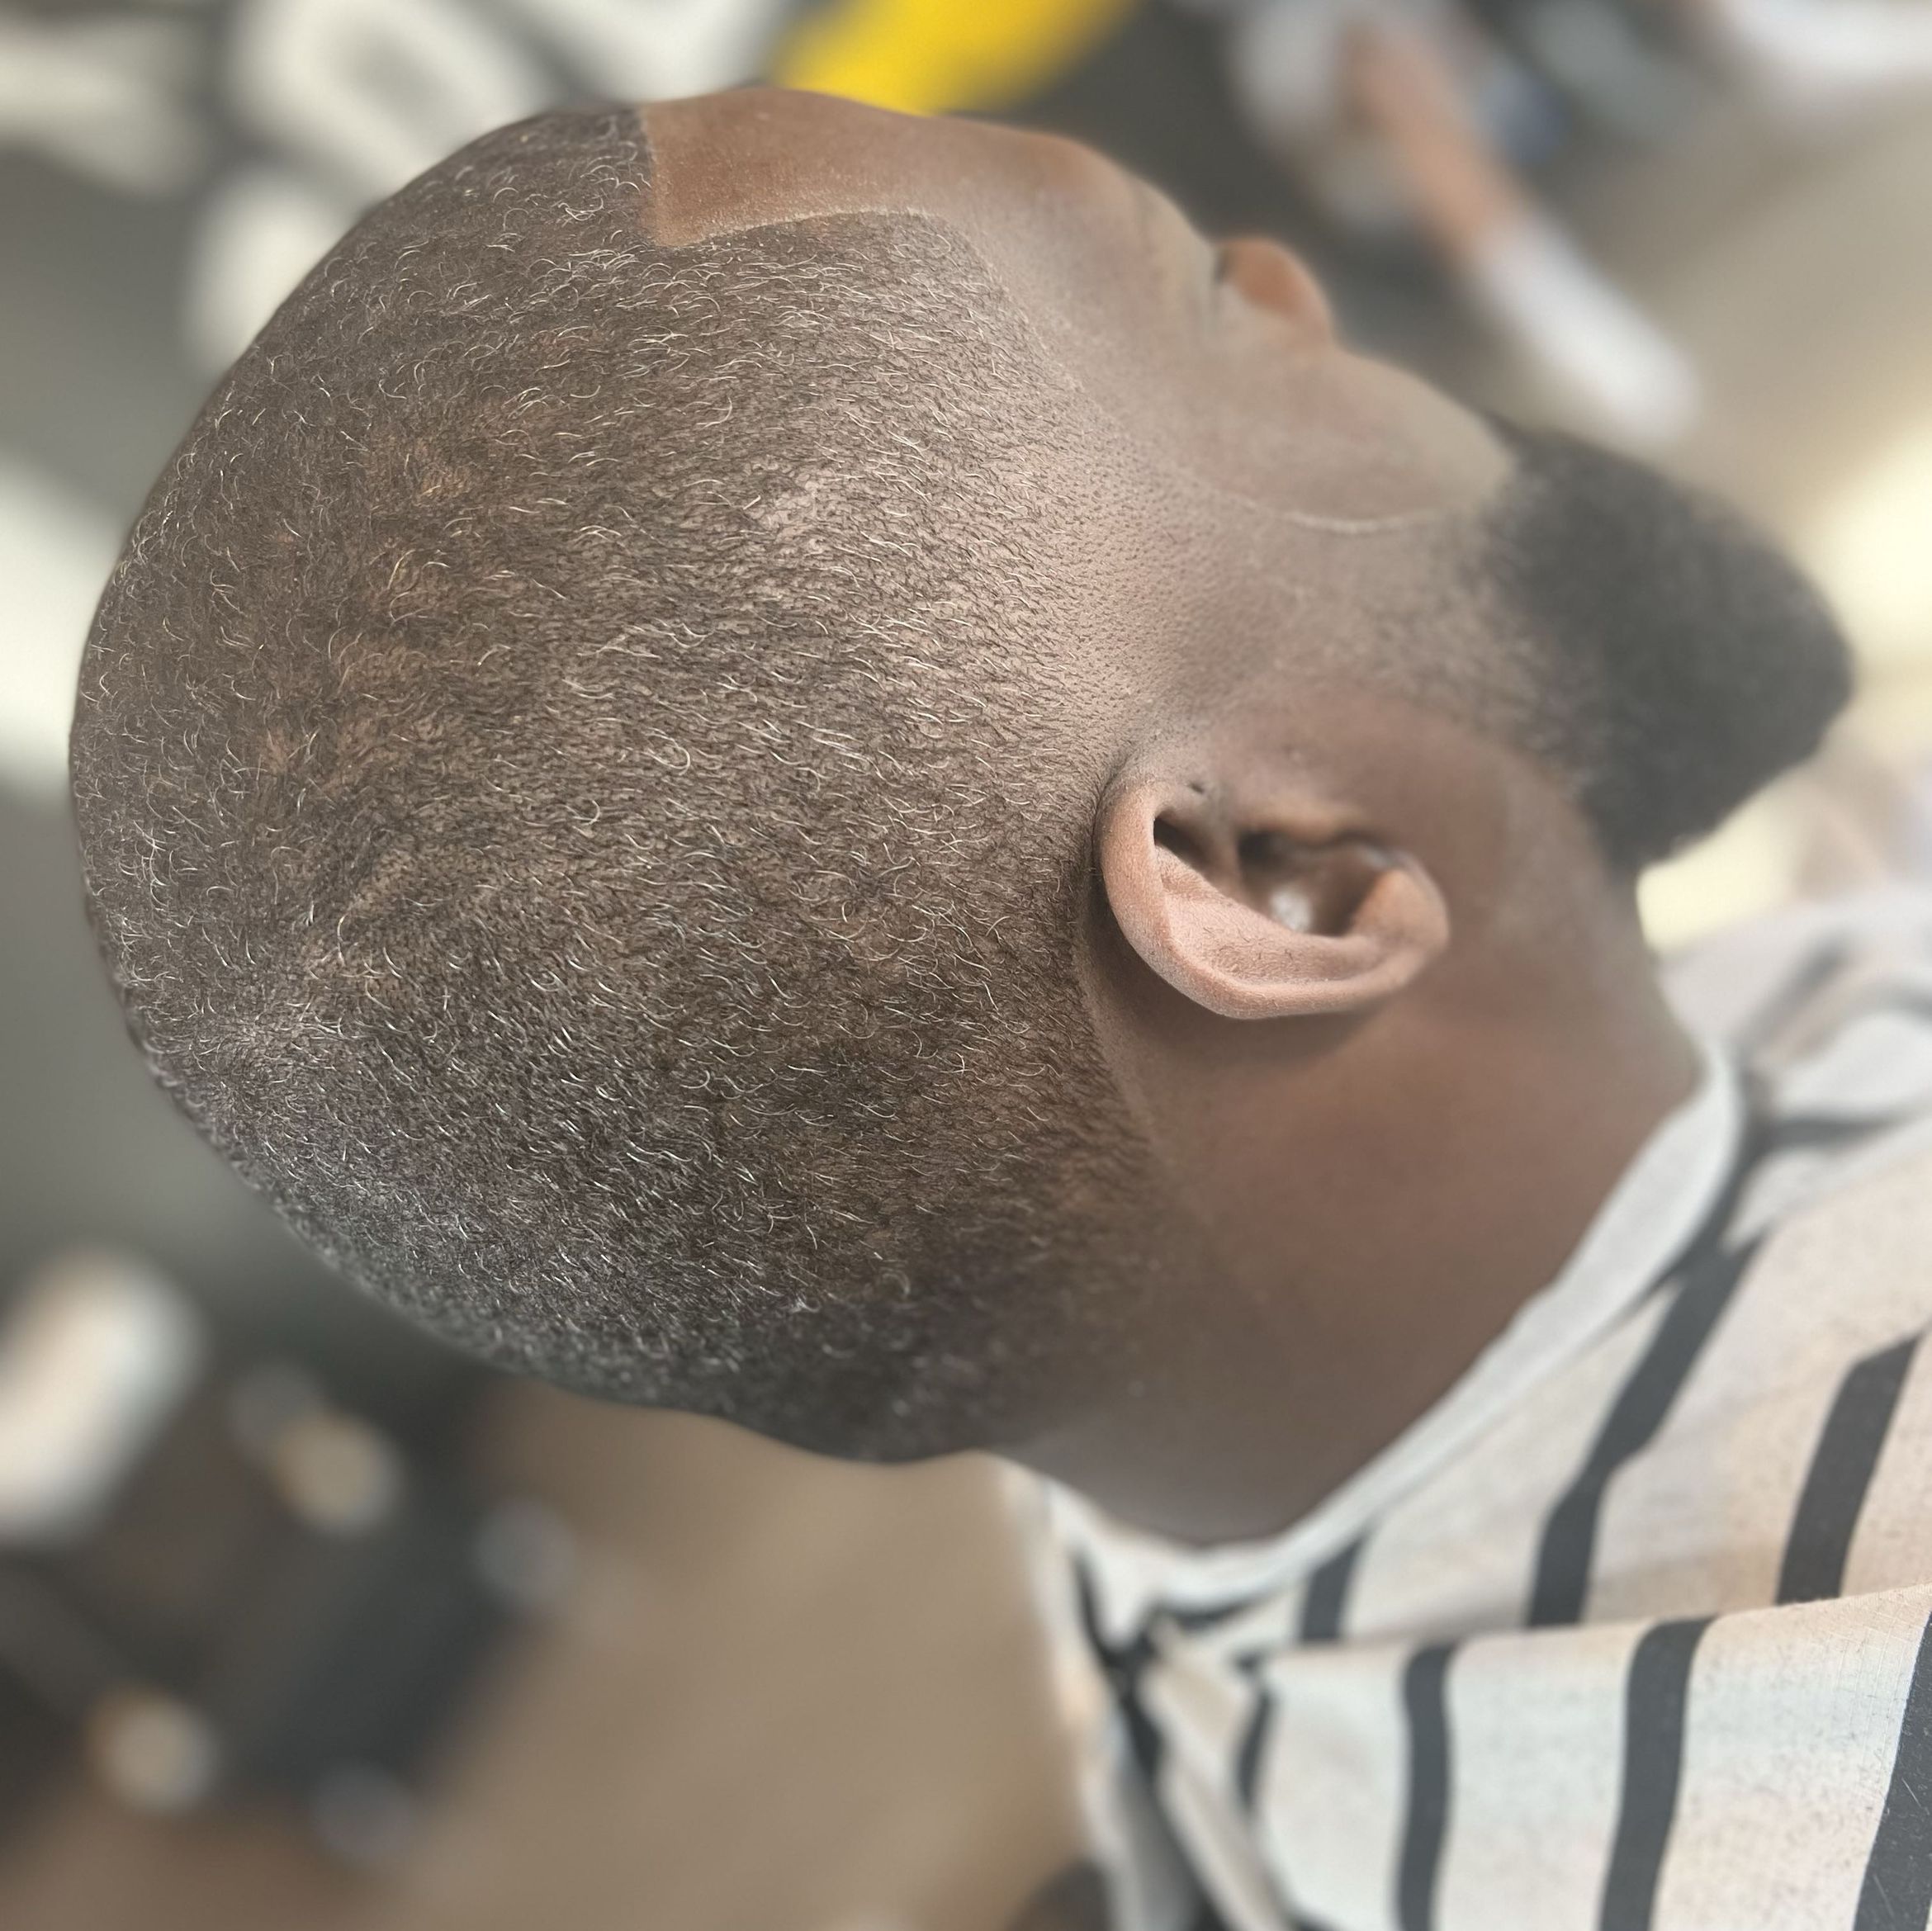 Men’s haircut and beard portfolio